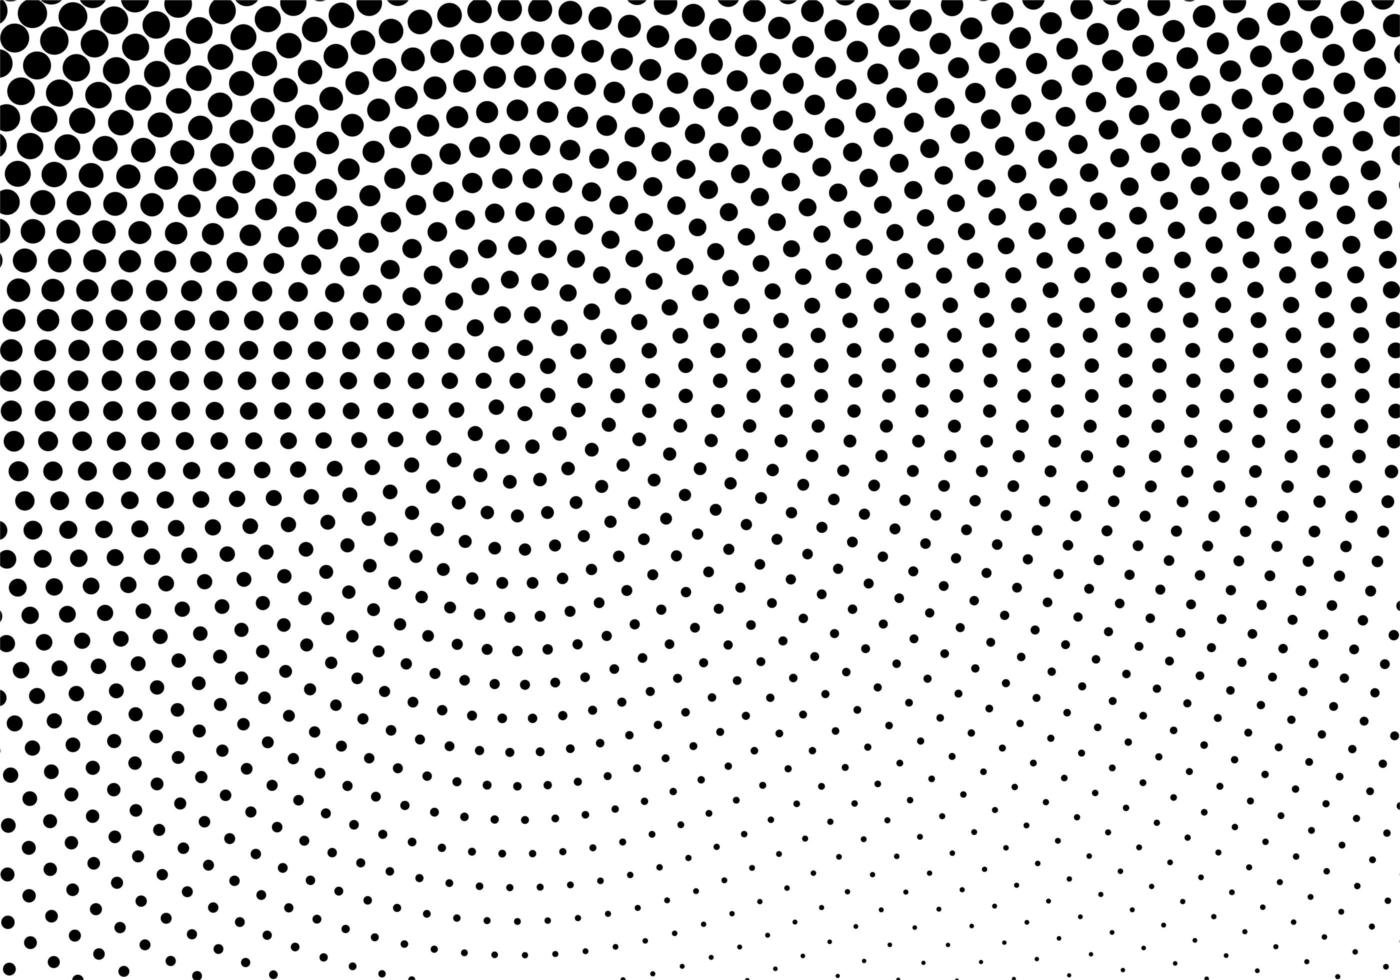 texture en pointillé circulaire abstraite vecteur